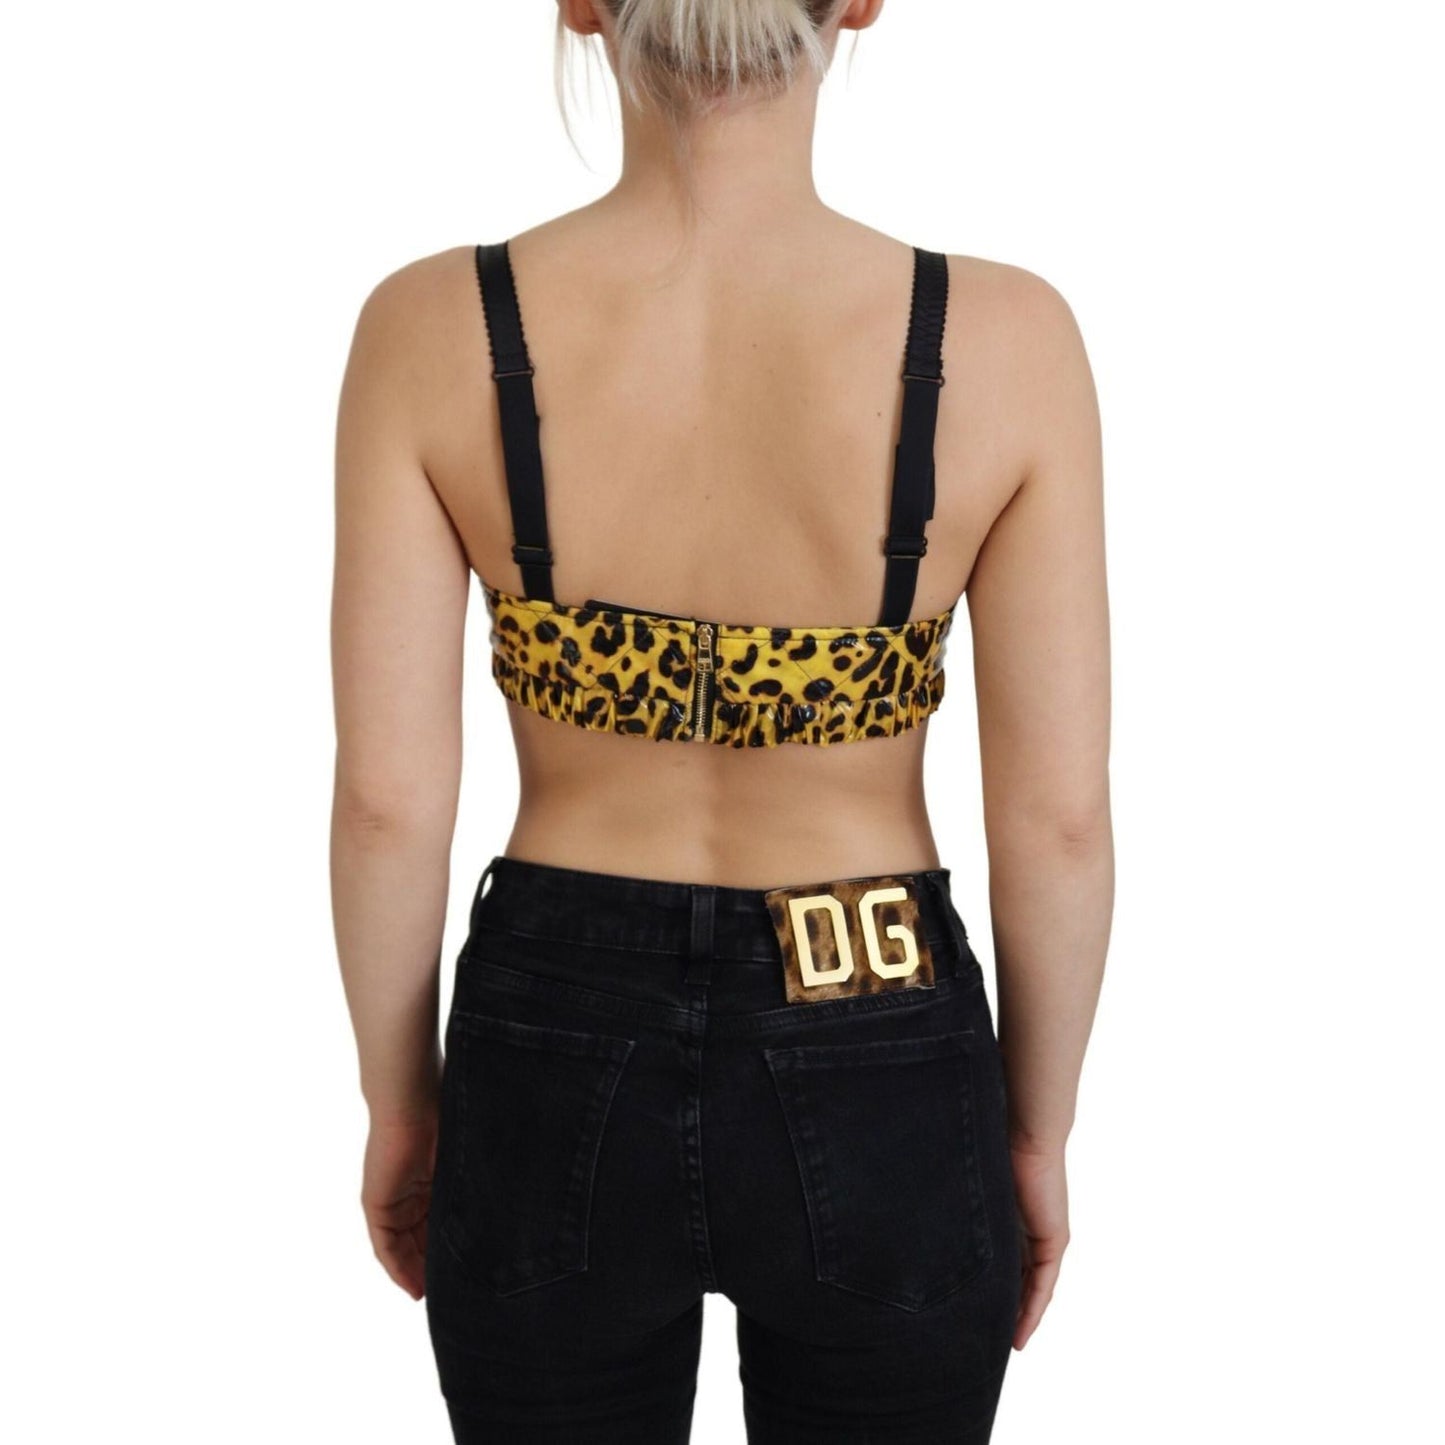 Dolce & Gabbana Chic Leopard Print Sleeveless Corset Top yellow-leopard-cropped-bustier-corset-bra-top IMG_0660-scaled-3c603c81-902.jpg